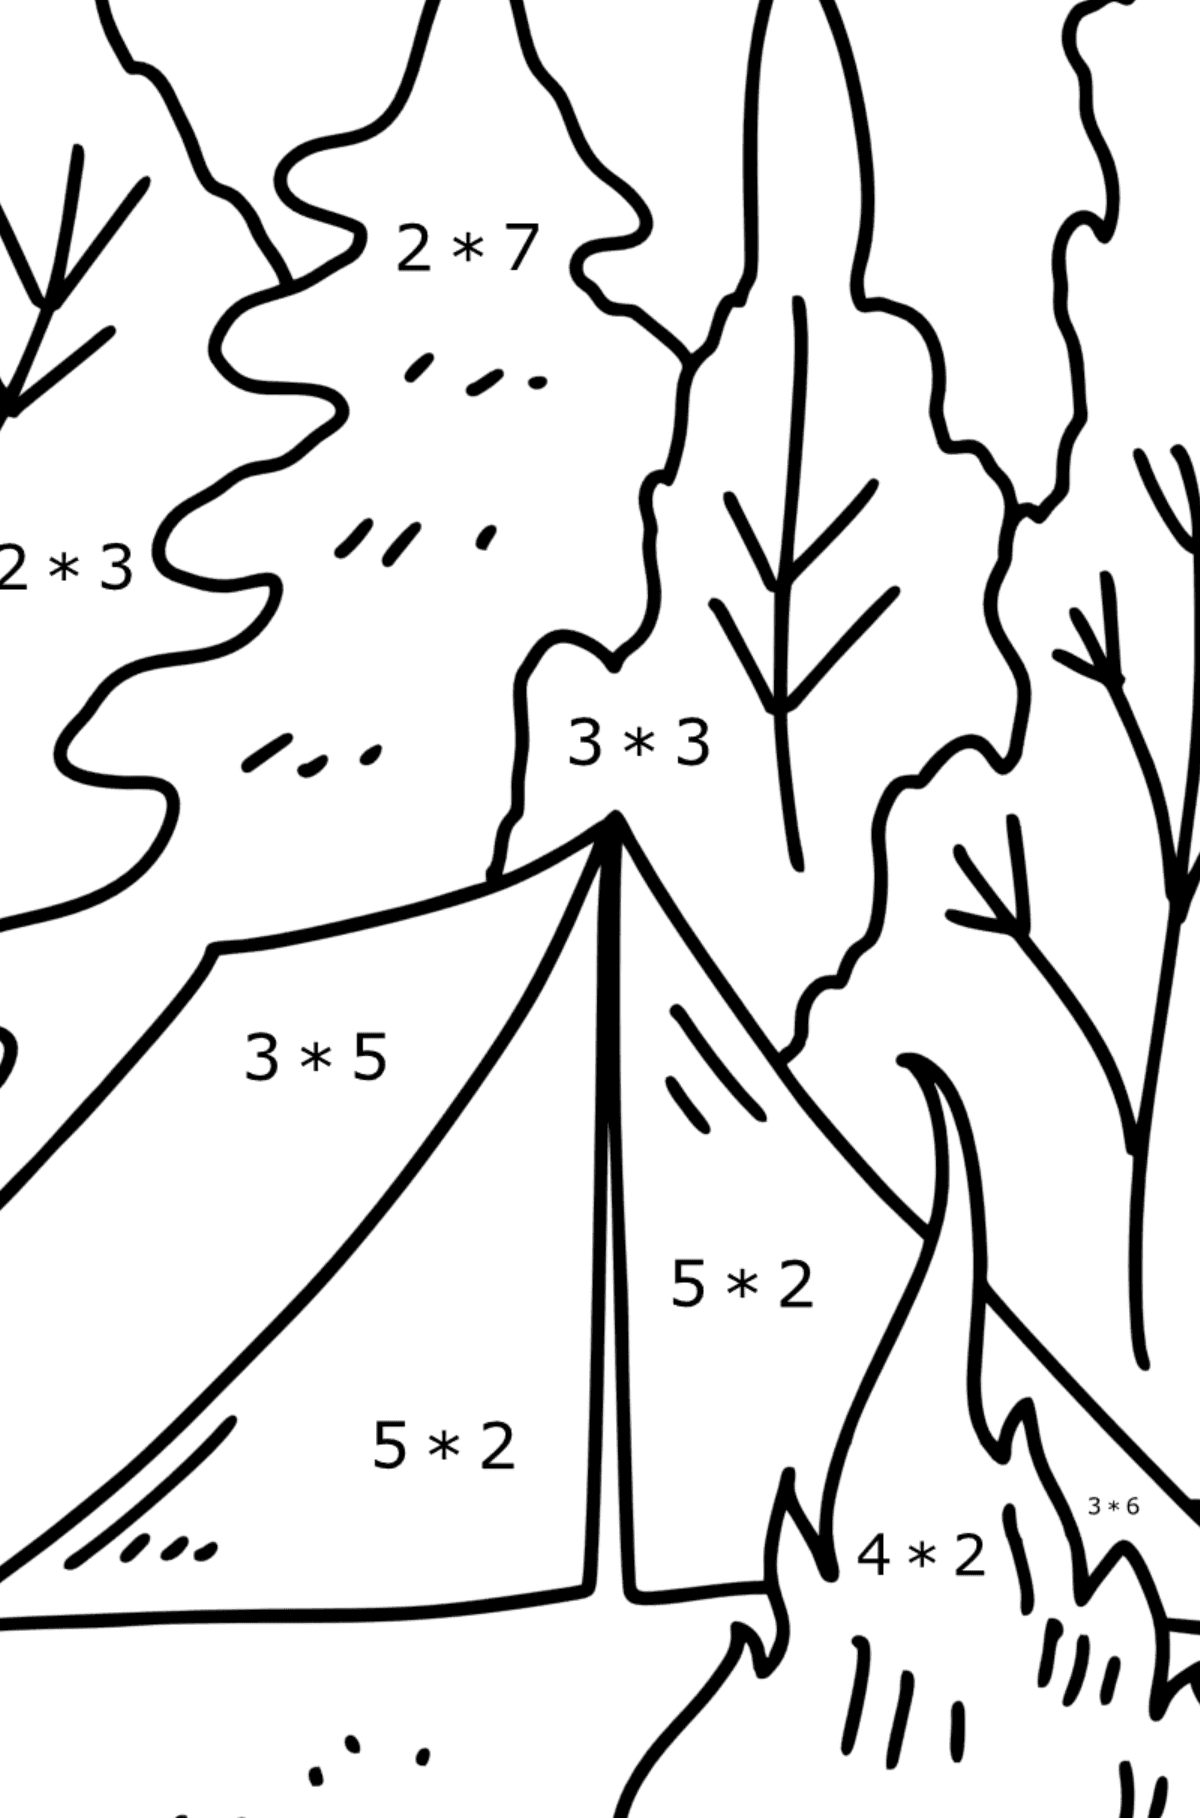 Ausmalbild - Zelt im Wald - Mathe Ausmalbilder - Multiplikation für Kinder